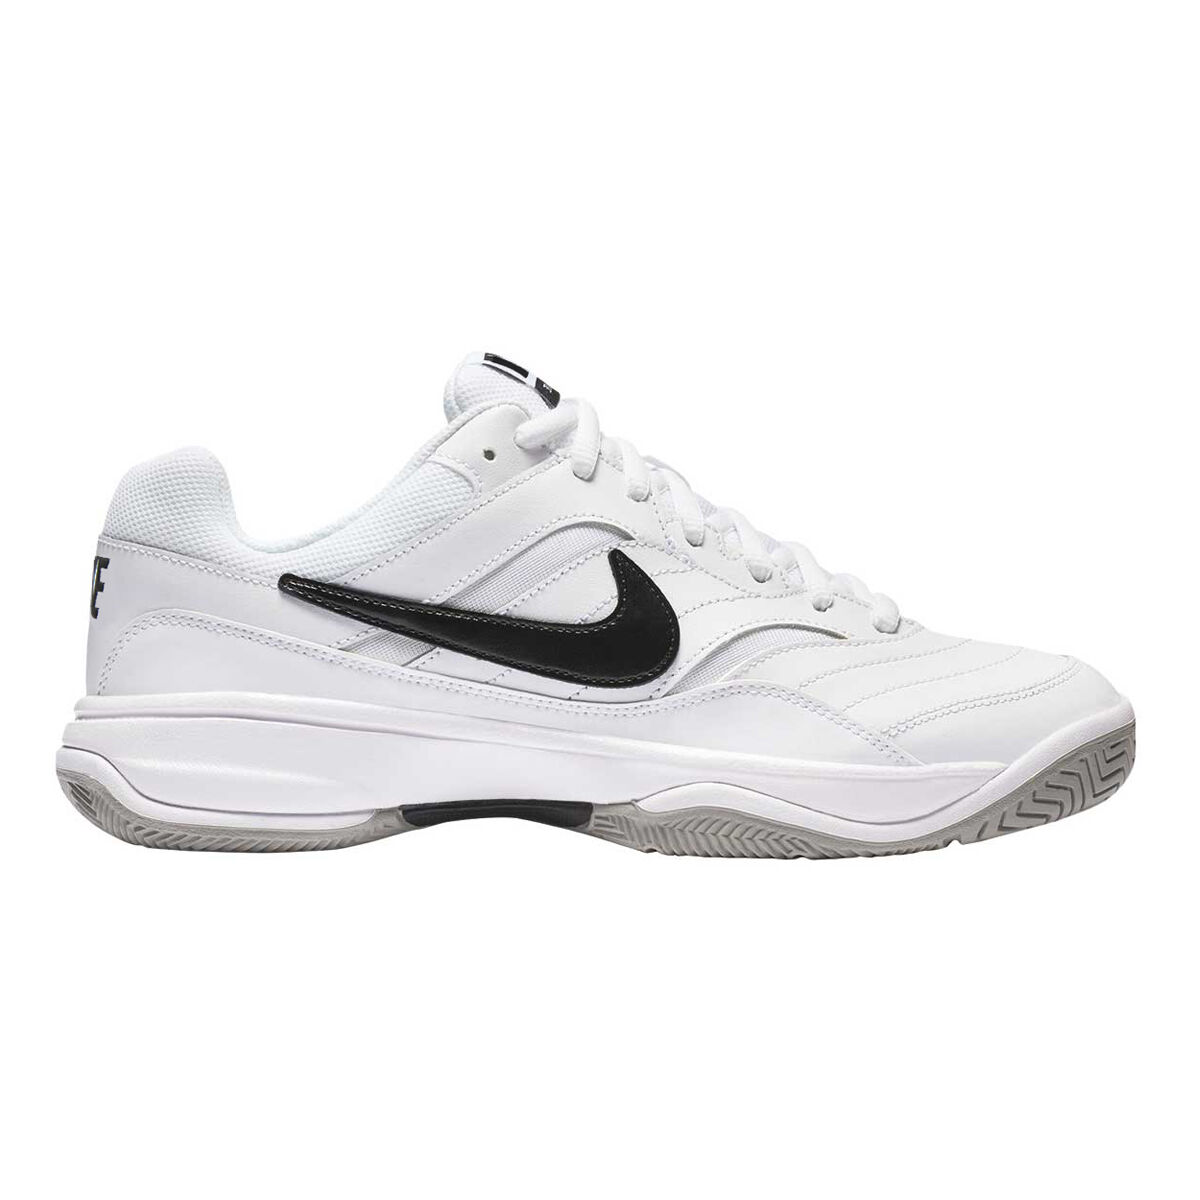 rebel sports tennis shoes